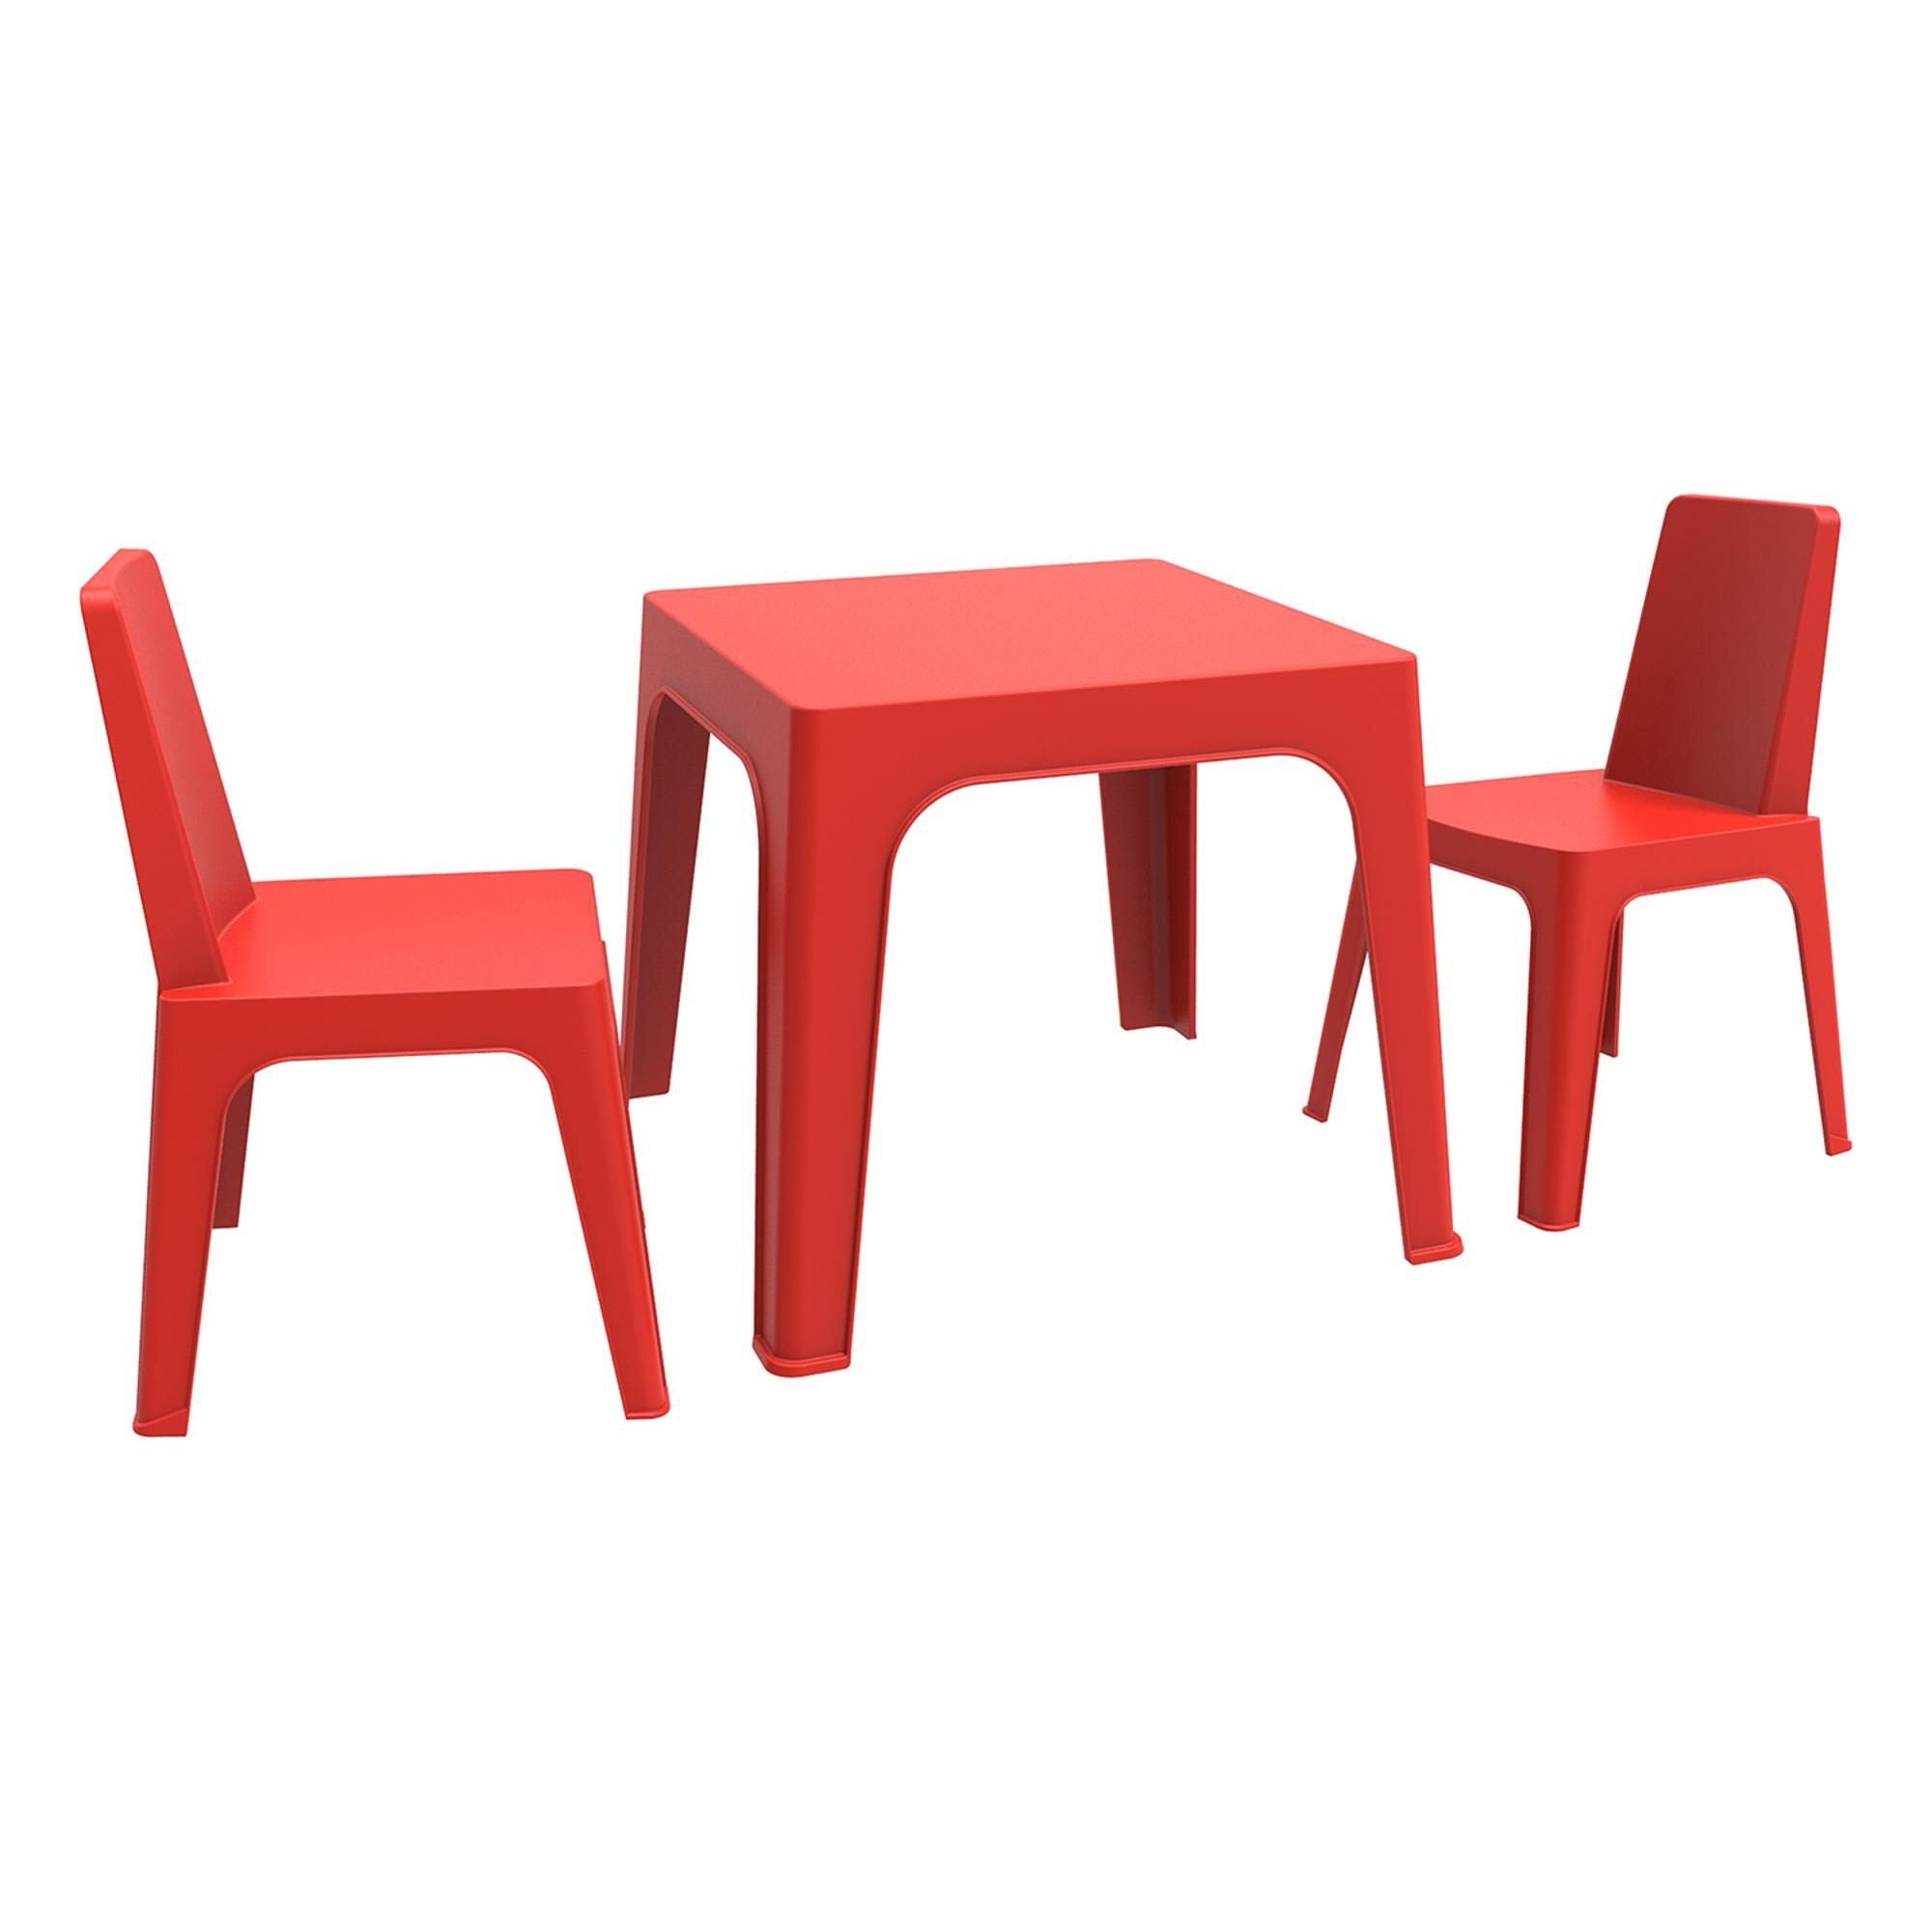 Garbar julieta kinderstoel en tafel set 2+1 rood